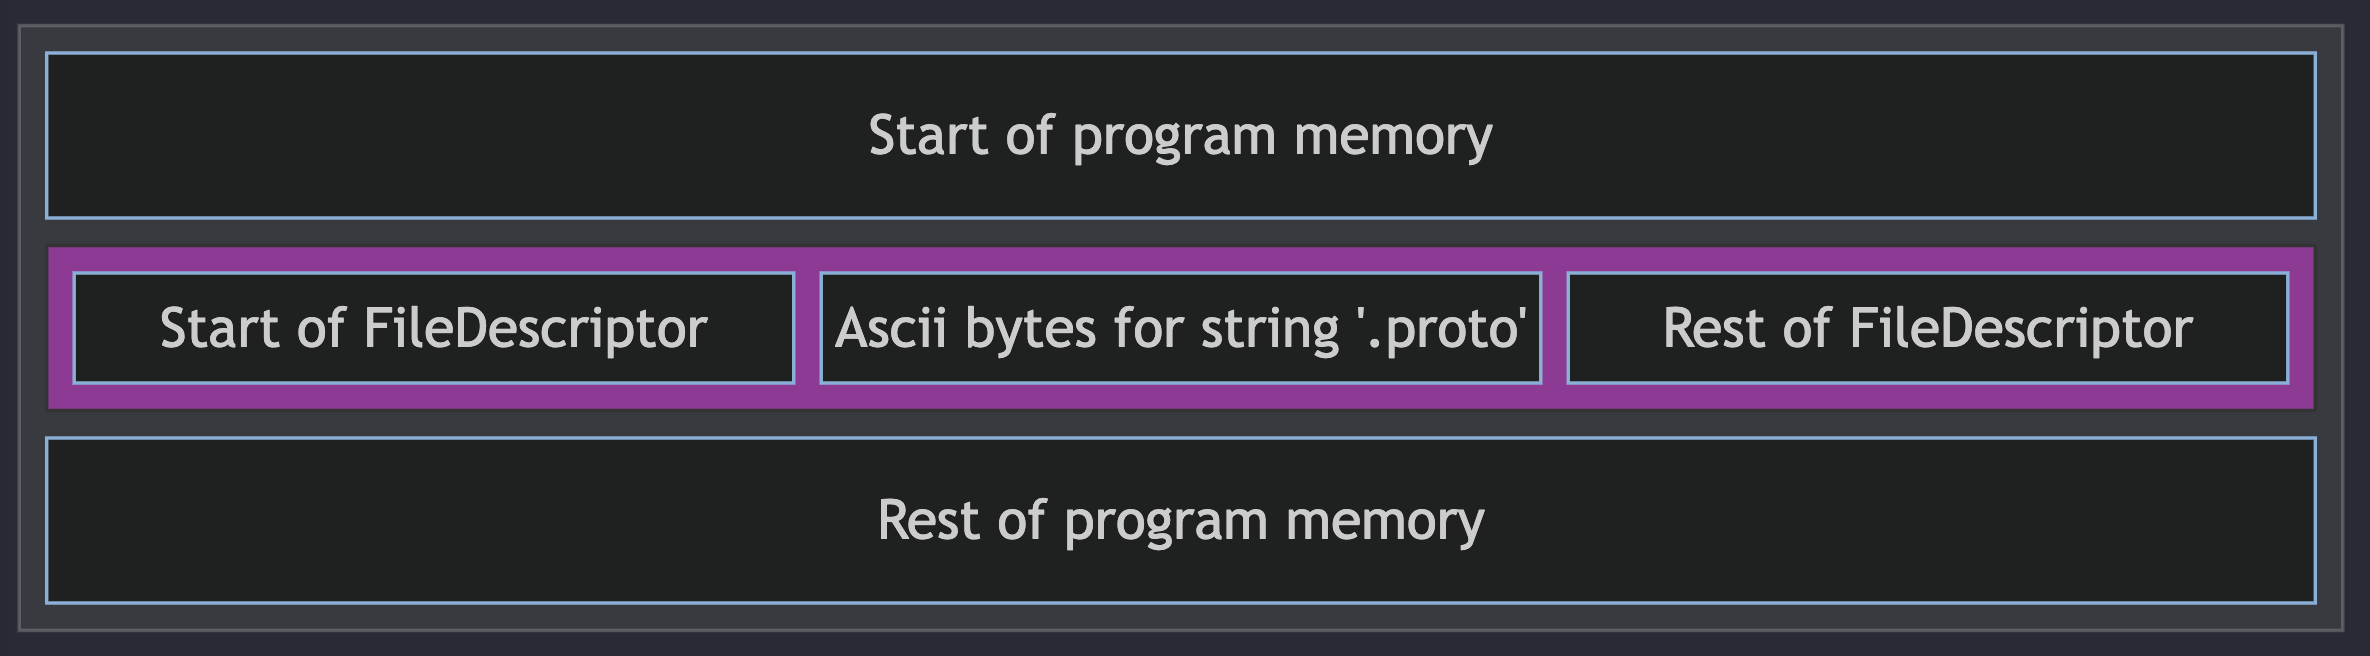 Program memory